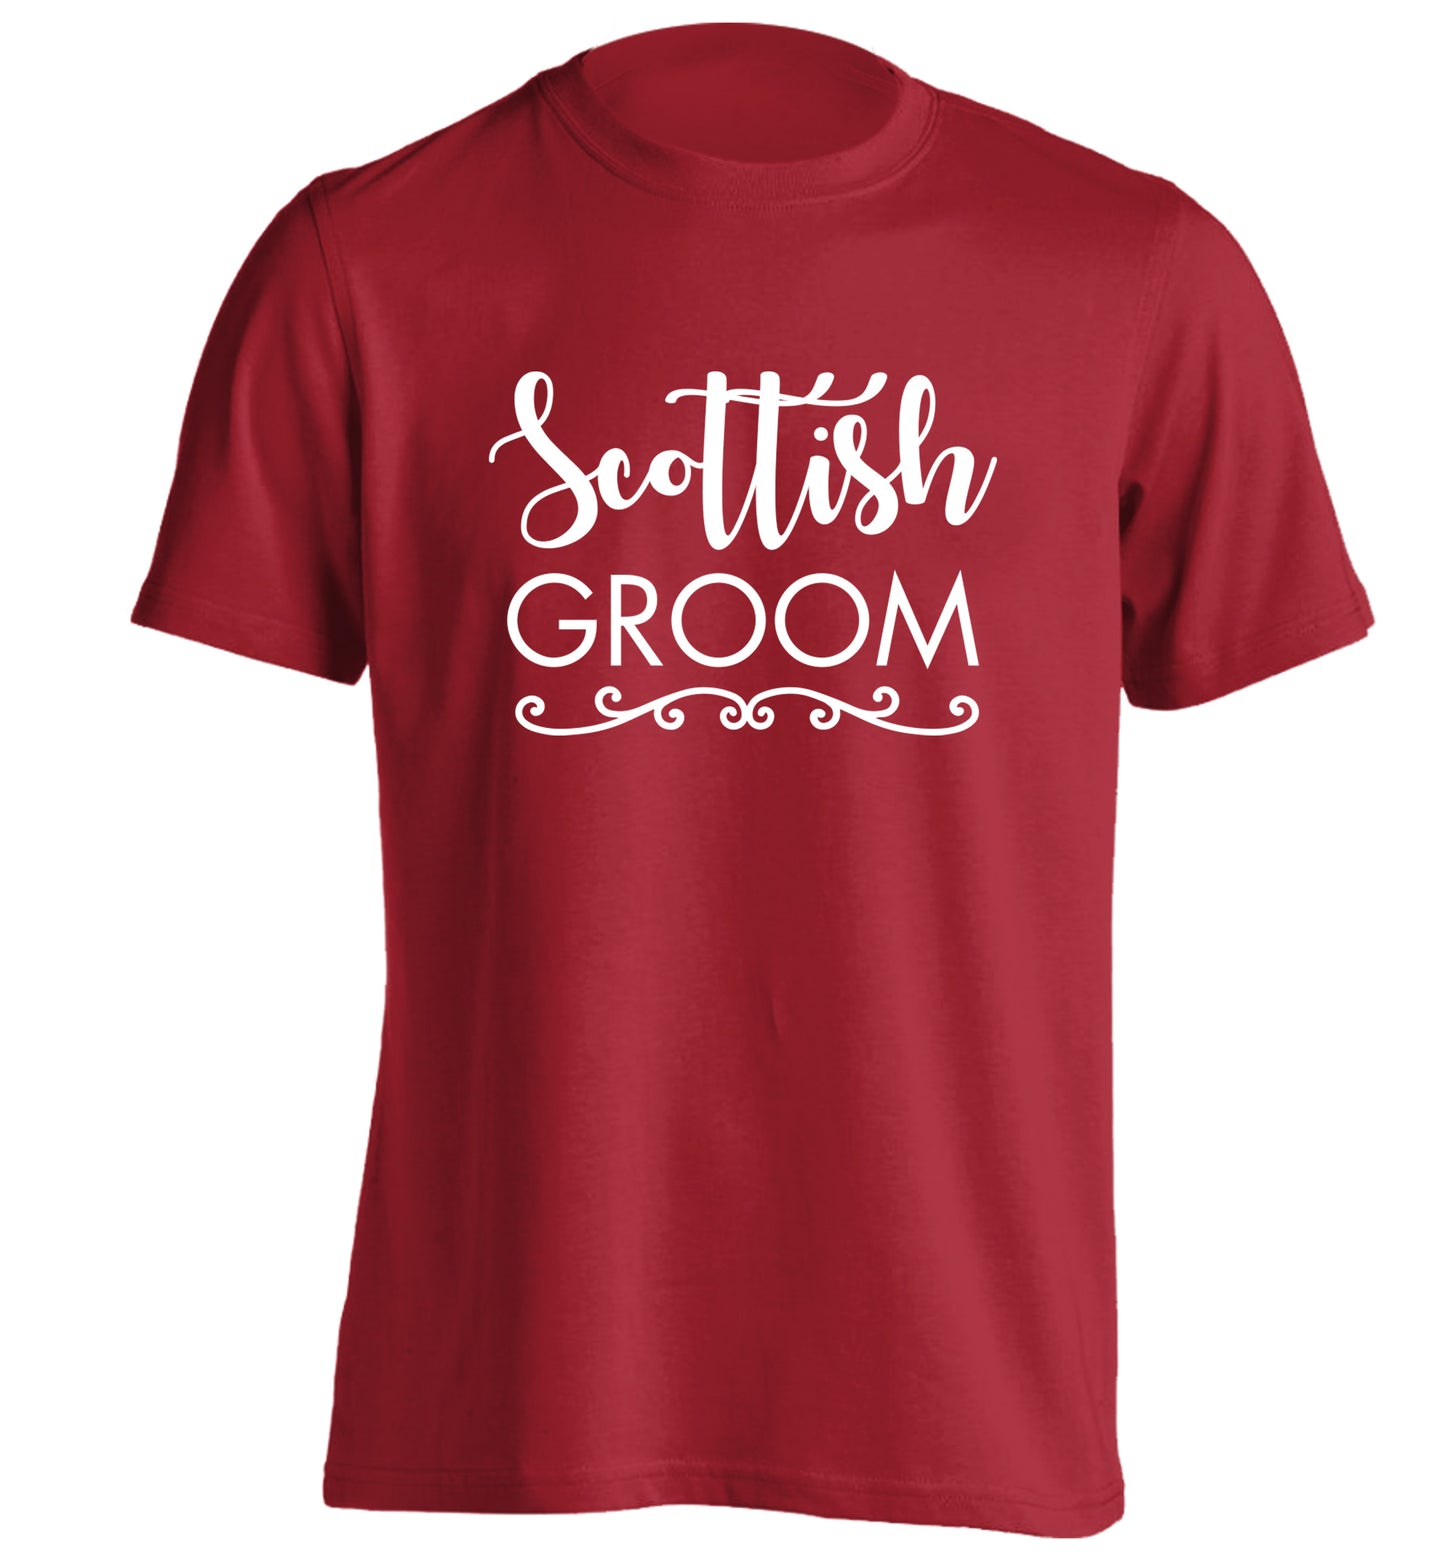 Scottish groom adults unisex red Tshirt 2XL